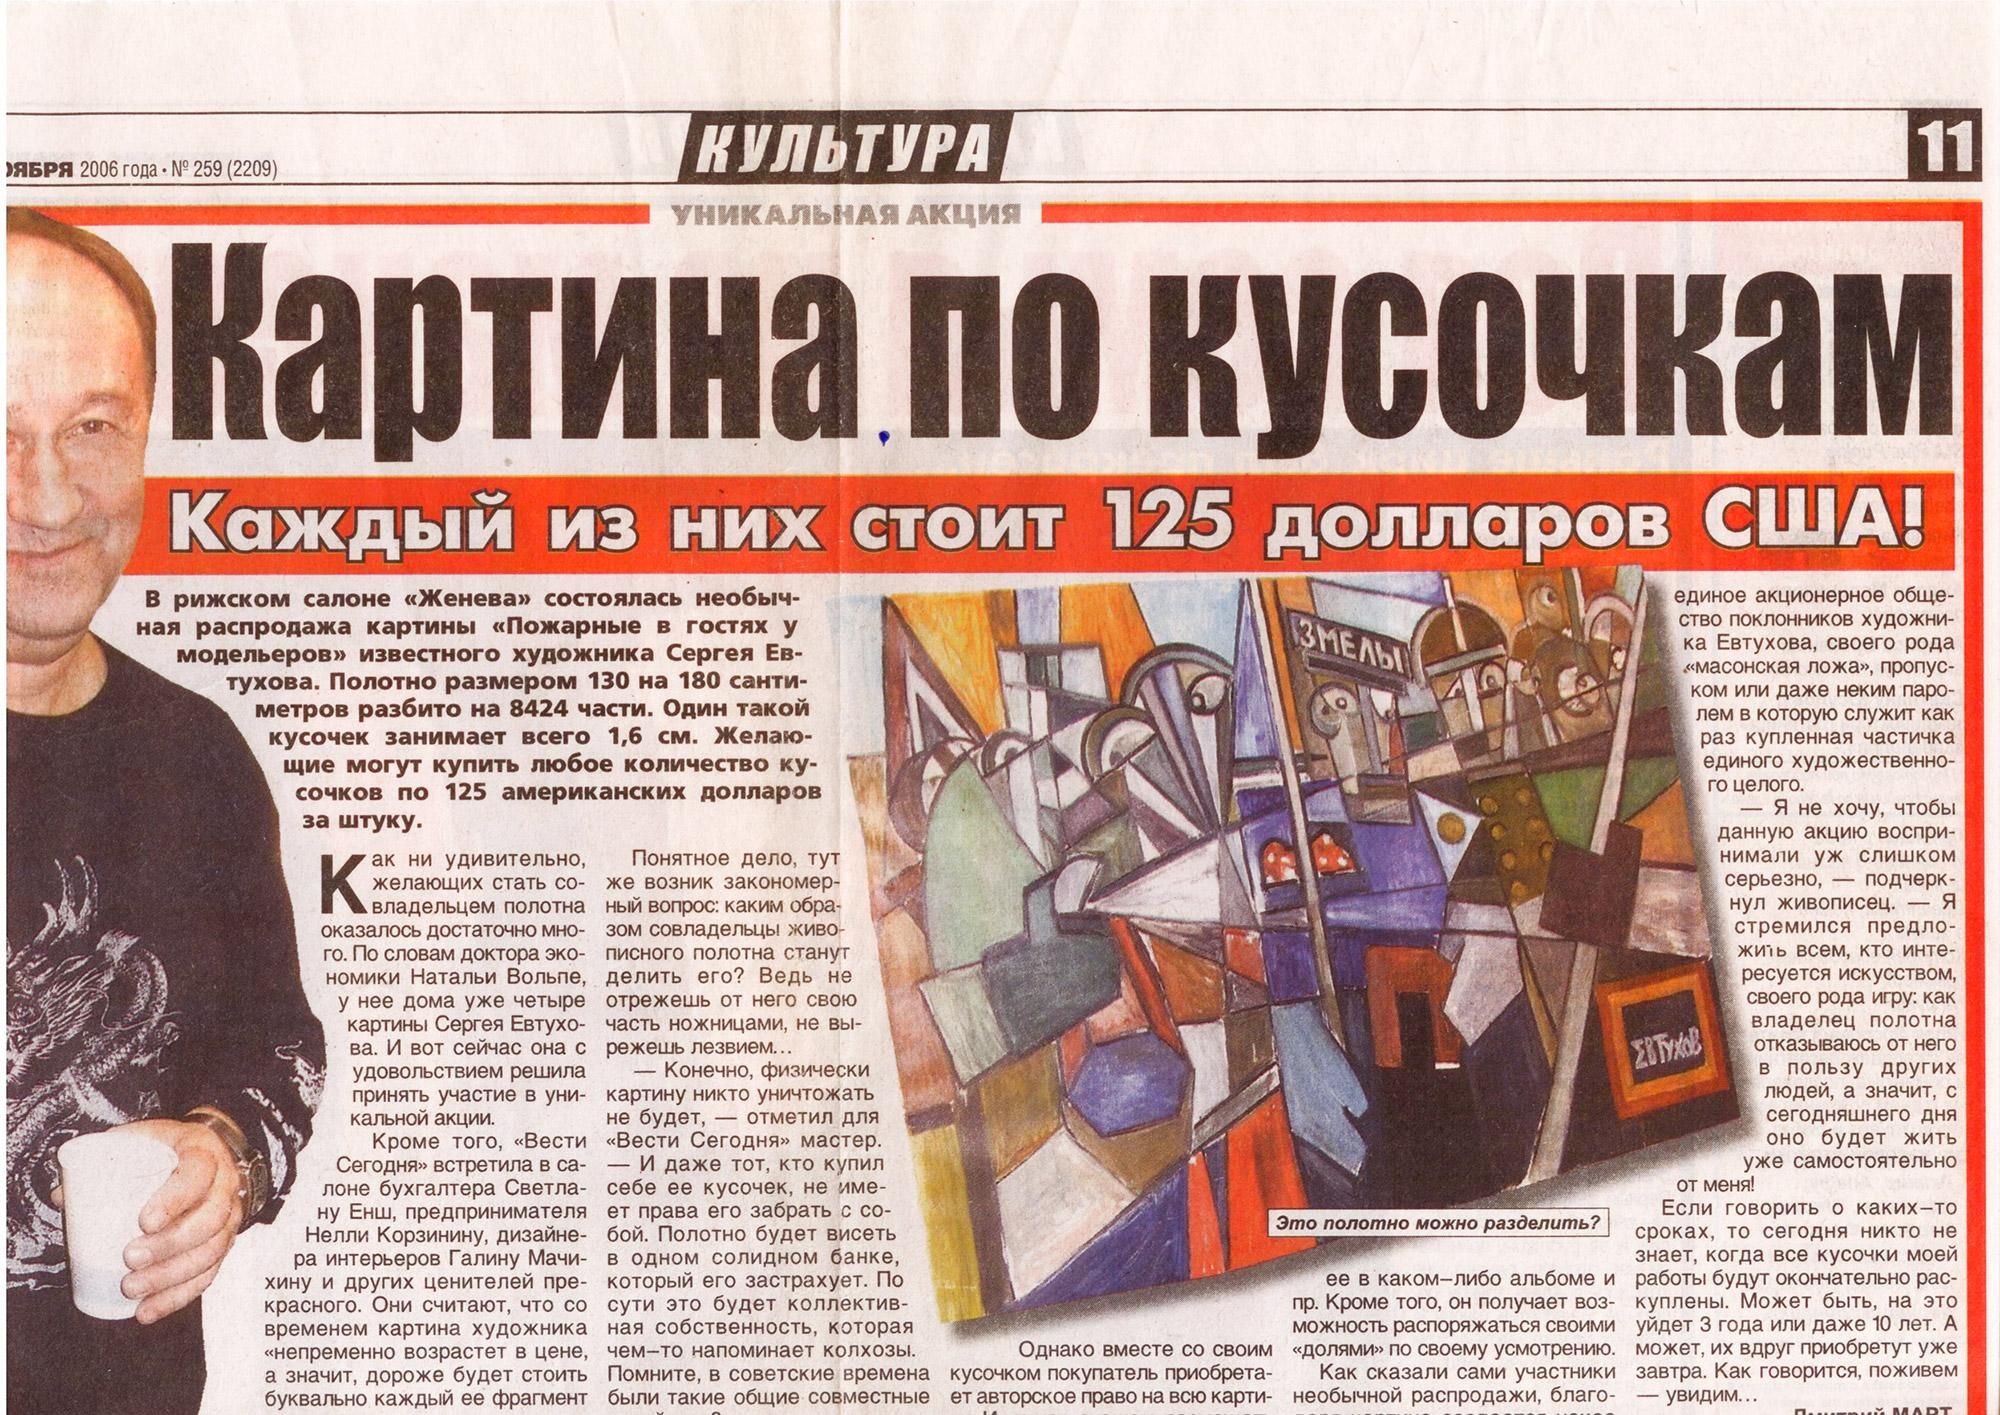 Article in the Riga newspaper <b>"Вести Сегодня"</b>